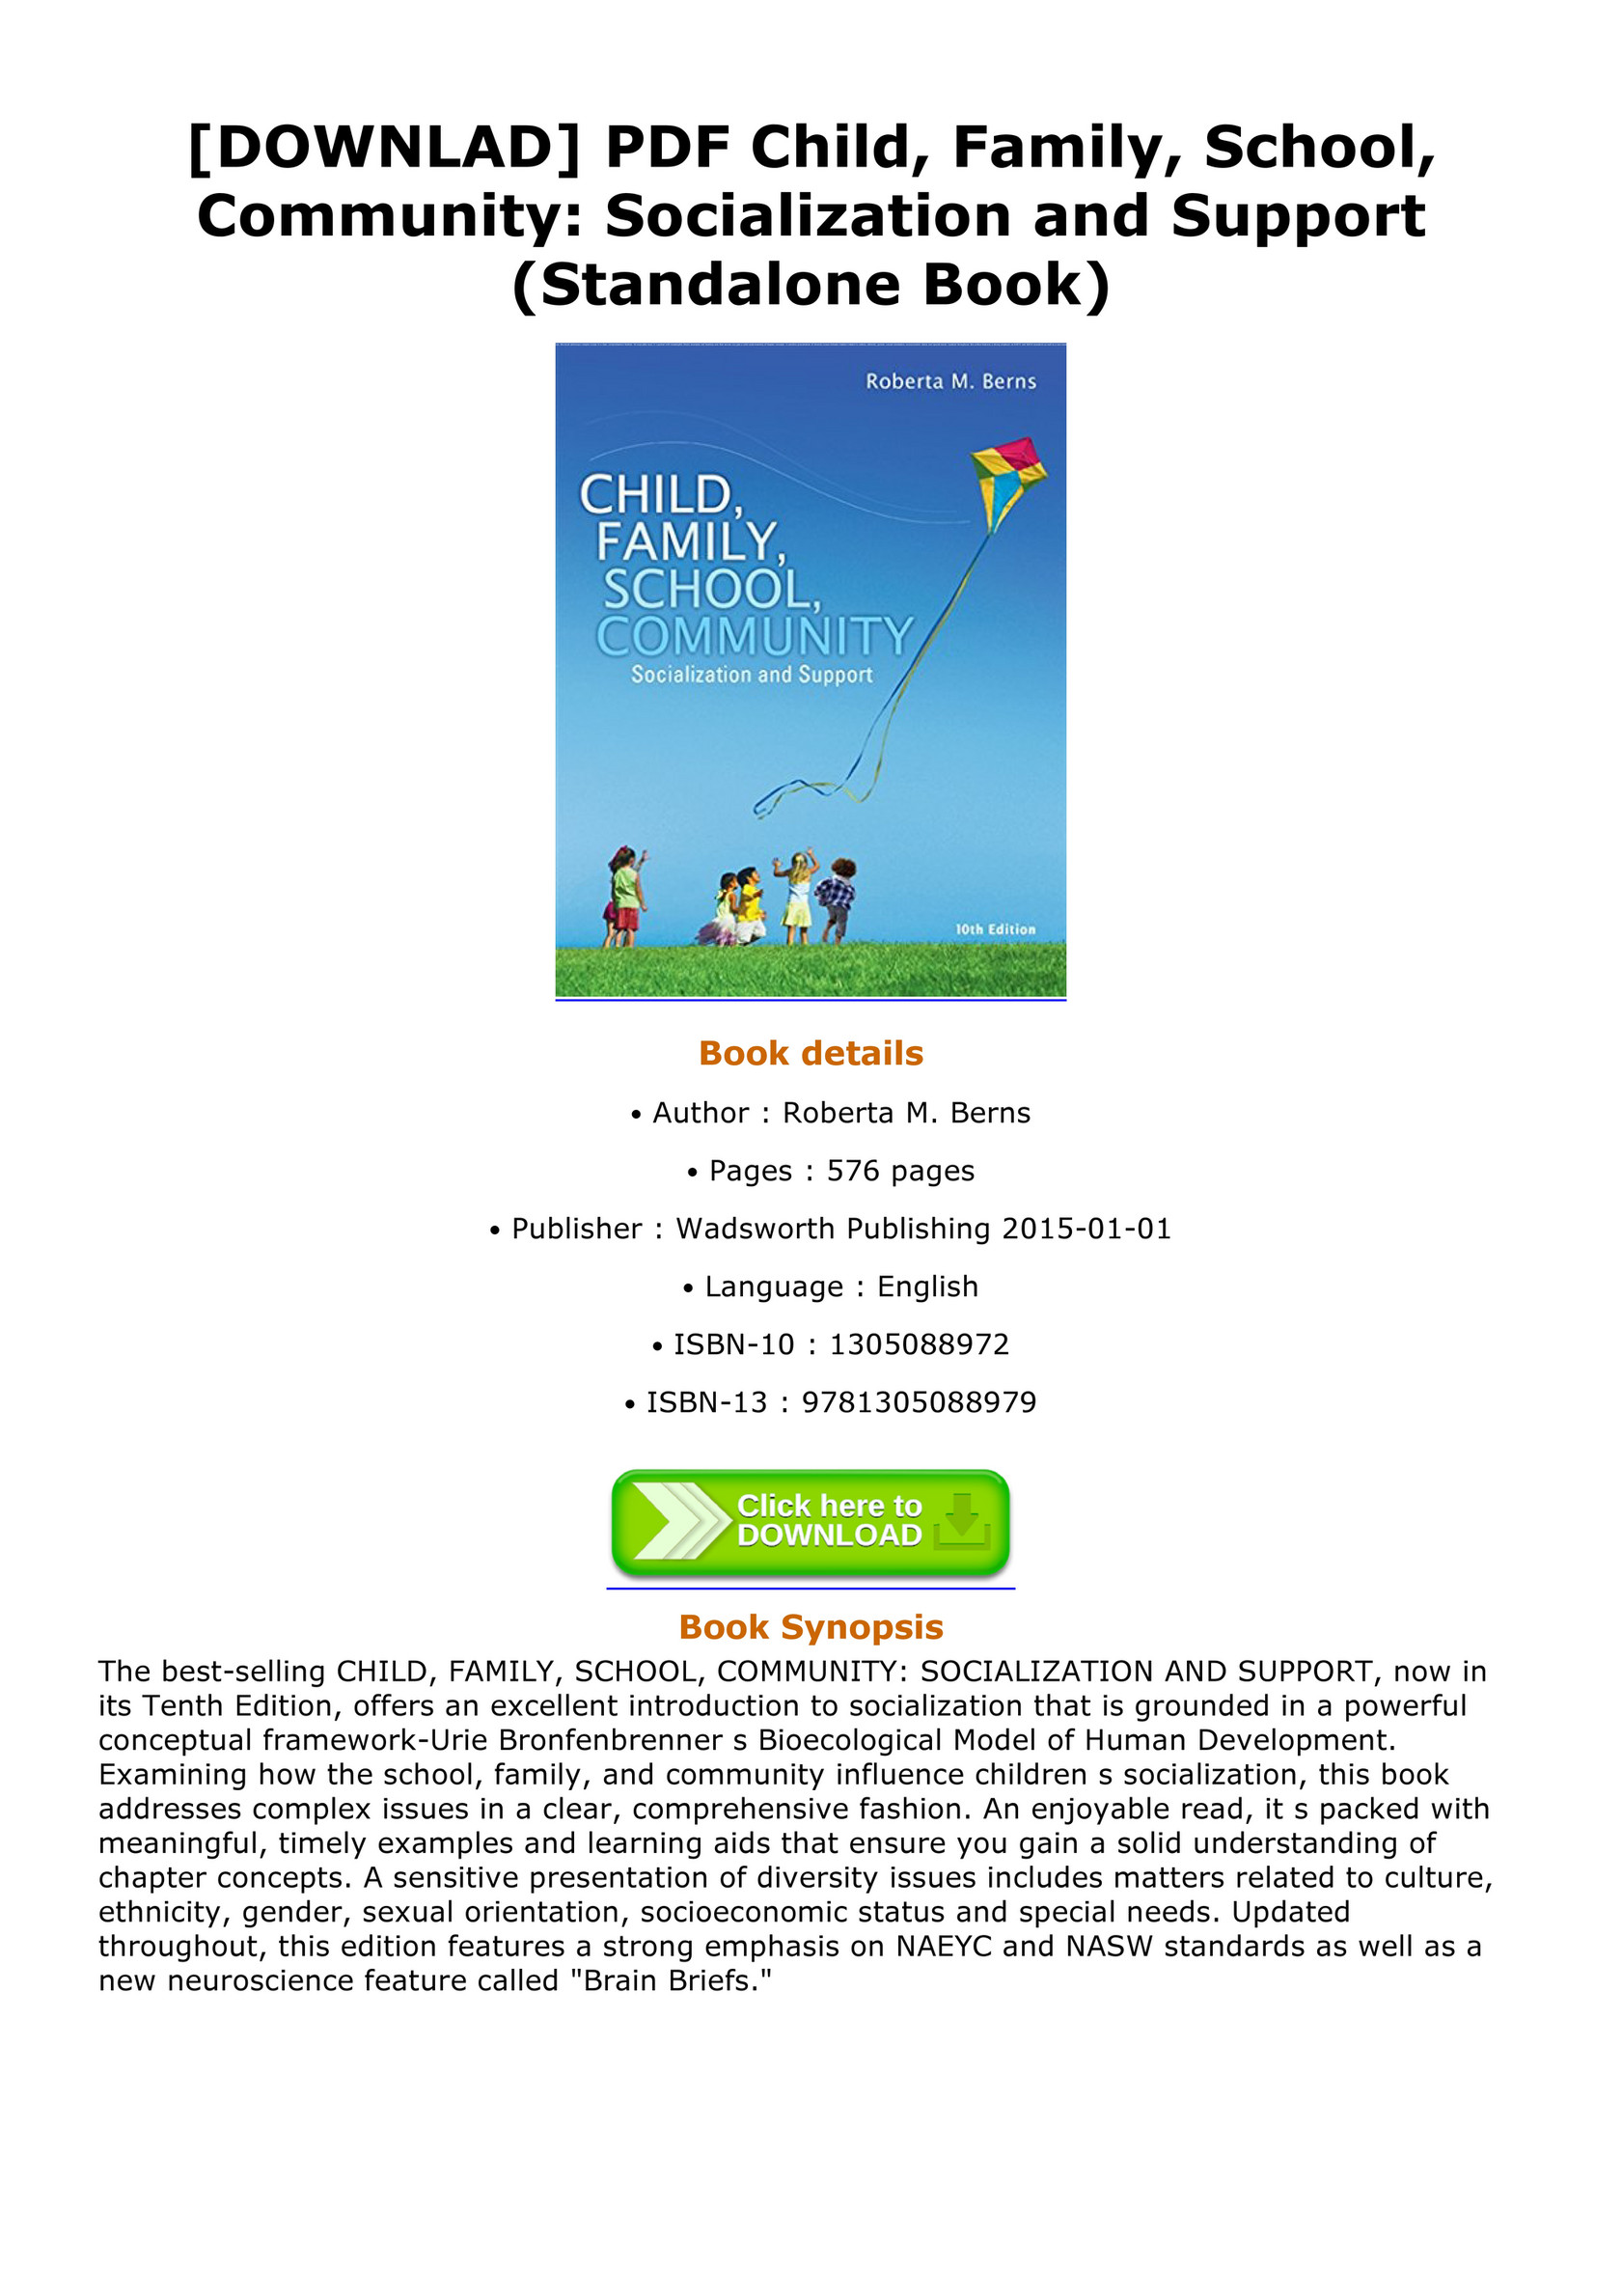 Jake - DOWNLAD PDF Child Family School Community Socialization and